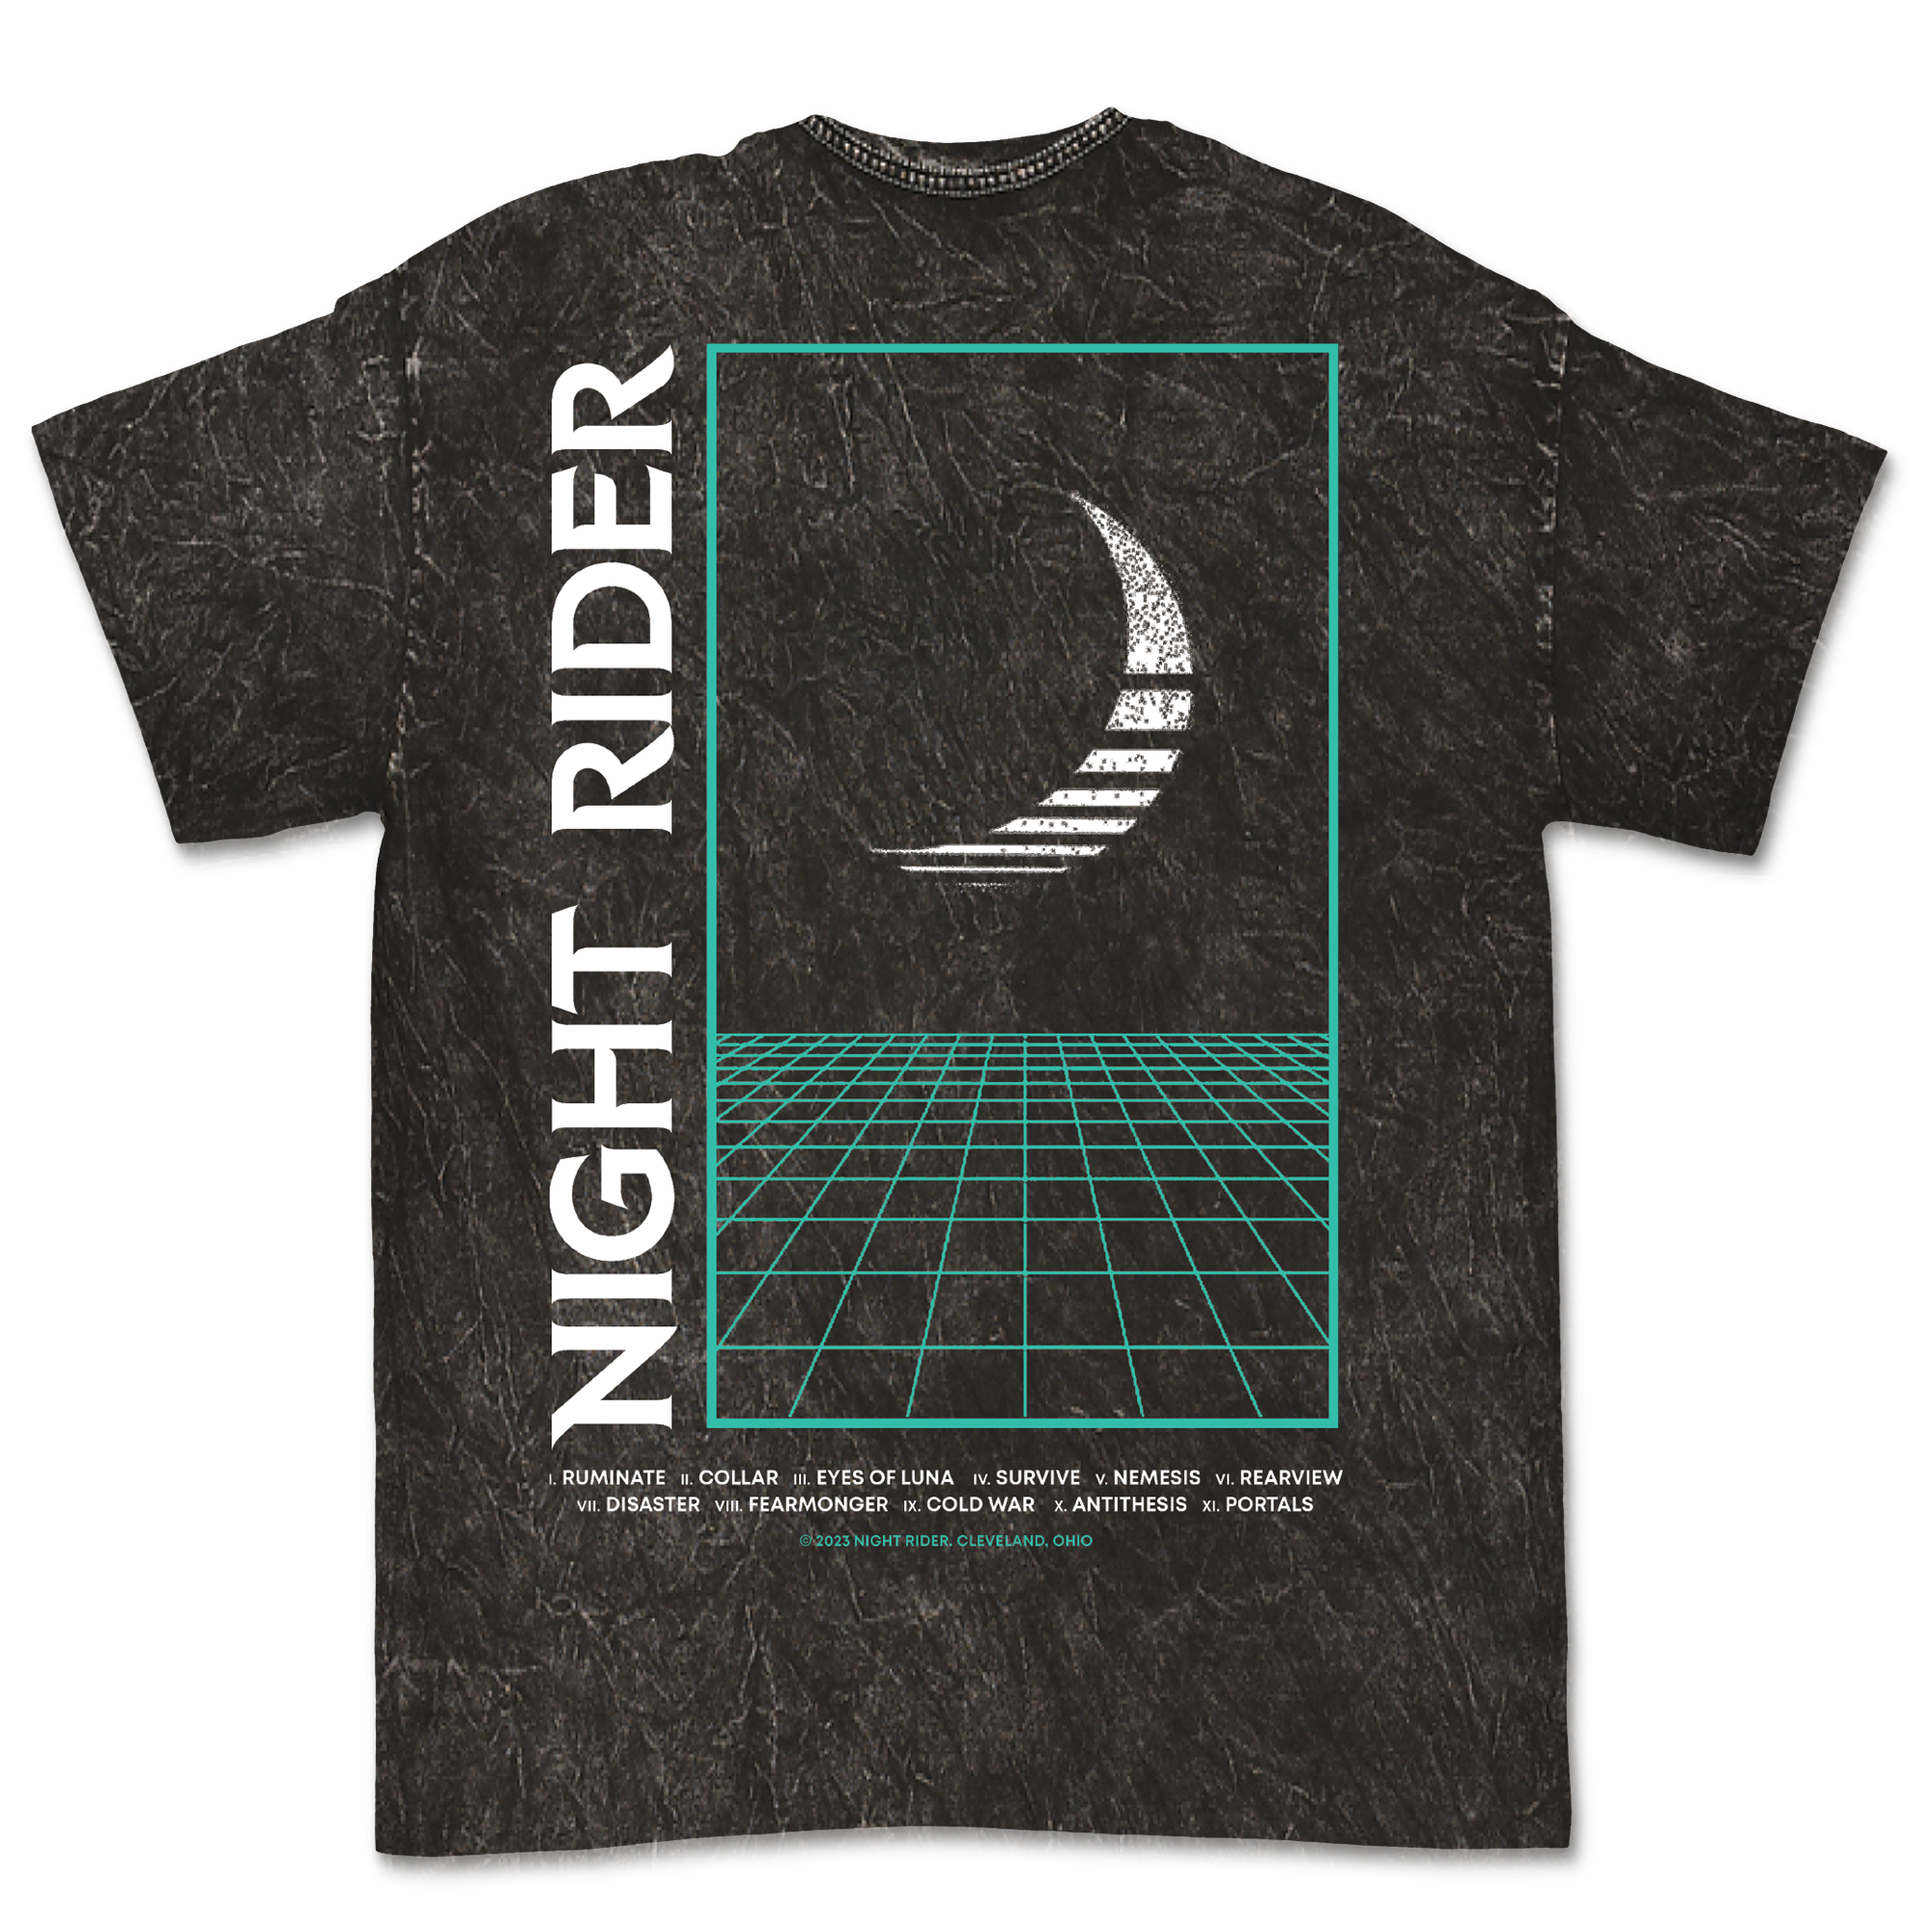 Night Rider - Logo Mineral Wash T-Shirt (Pre-Order)